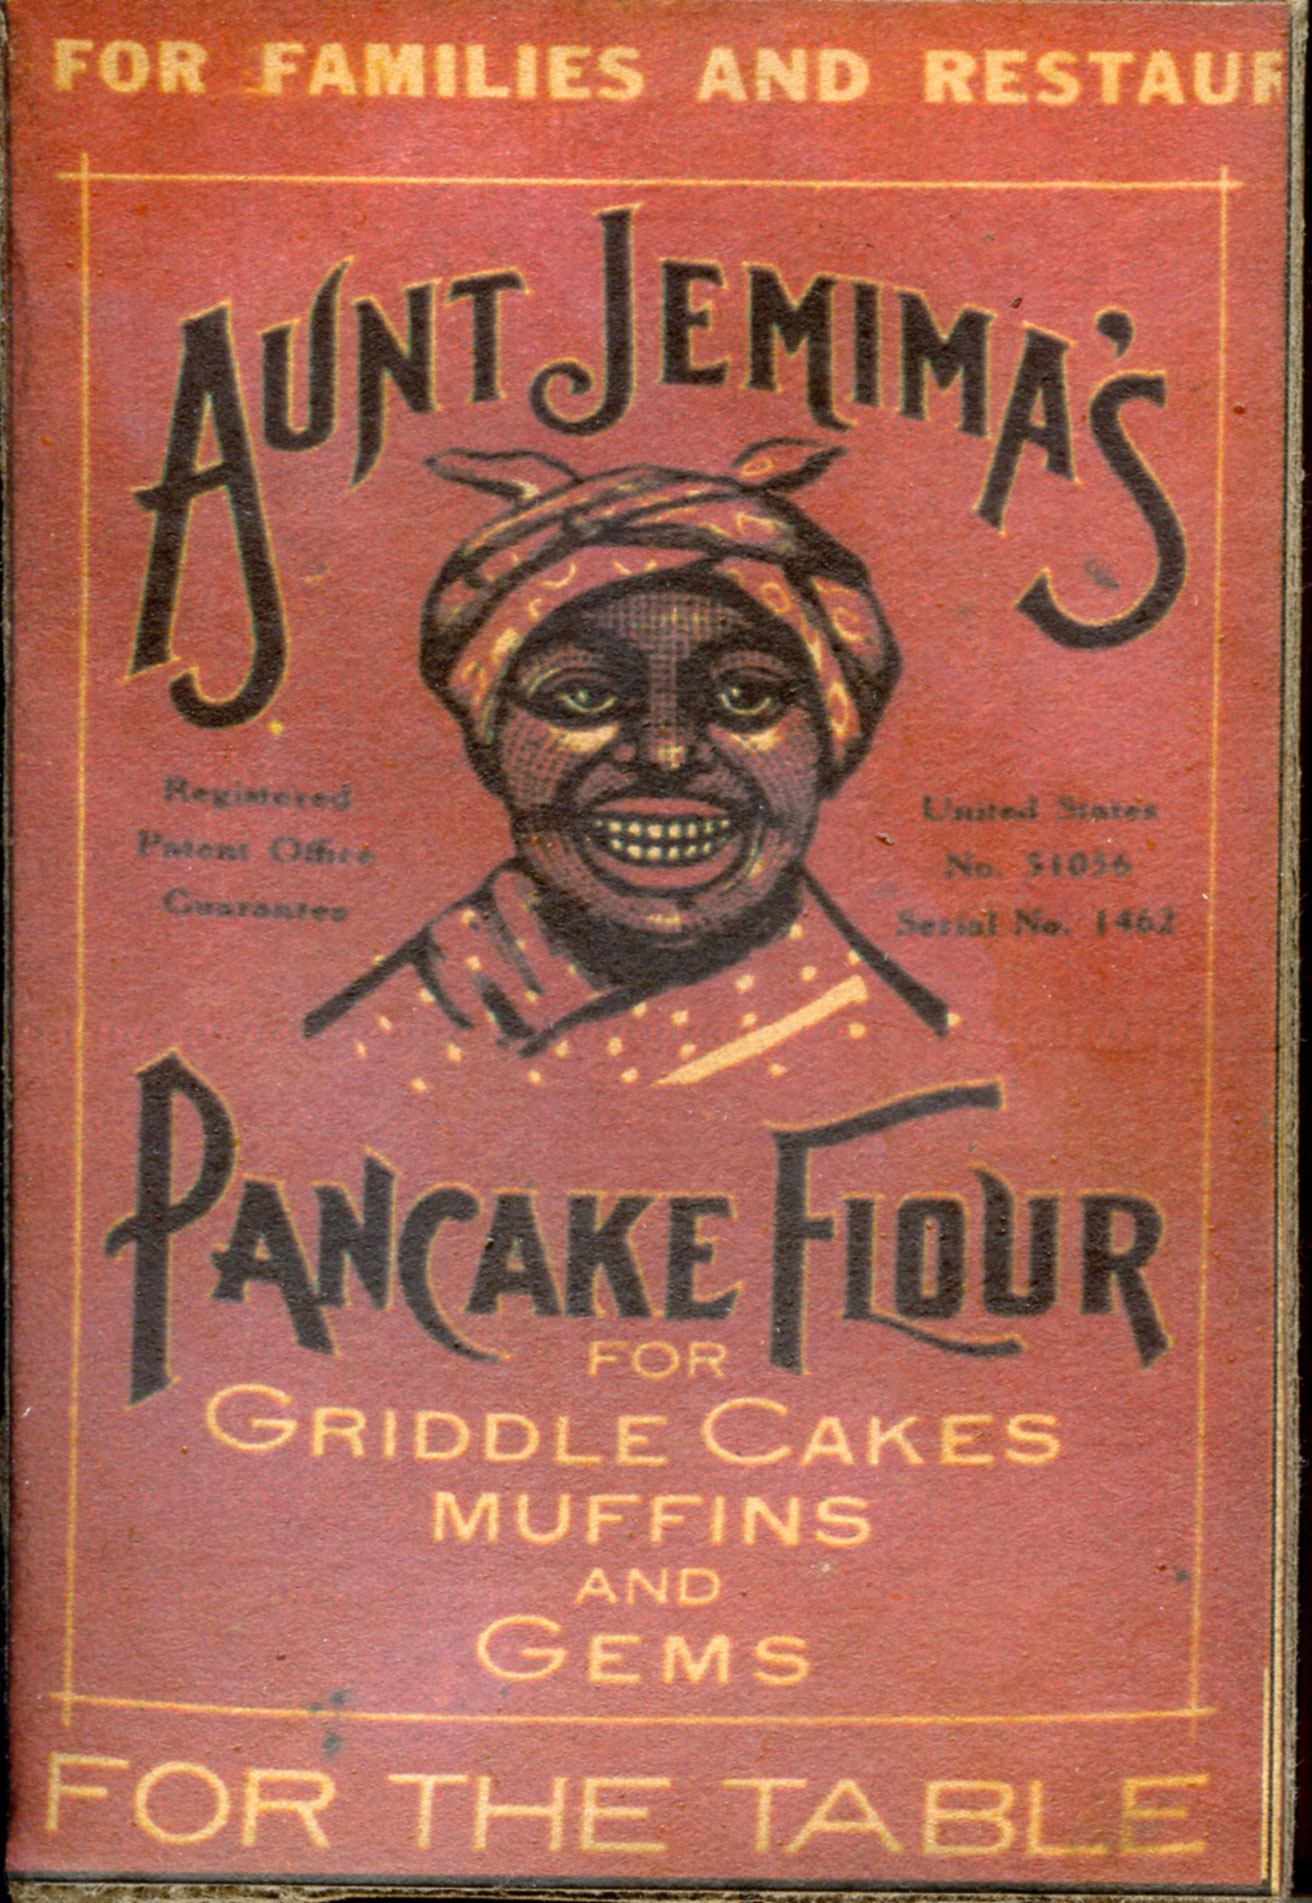 AuntJemimaBox African American Museum of Iowa